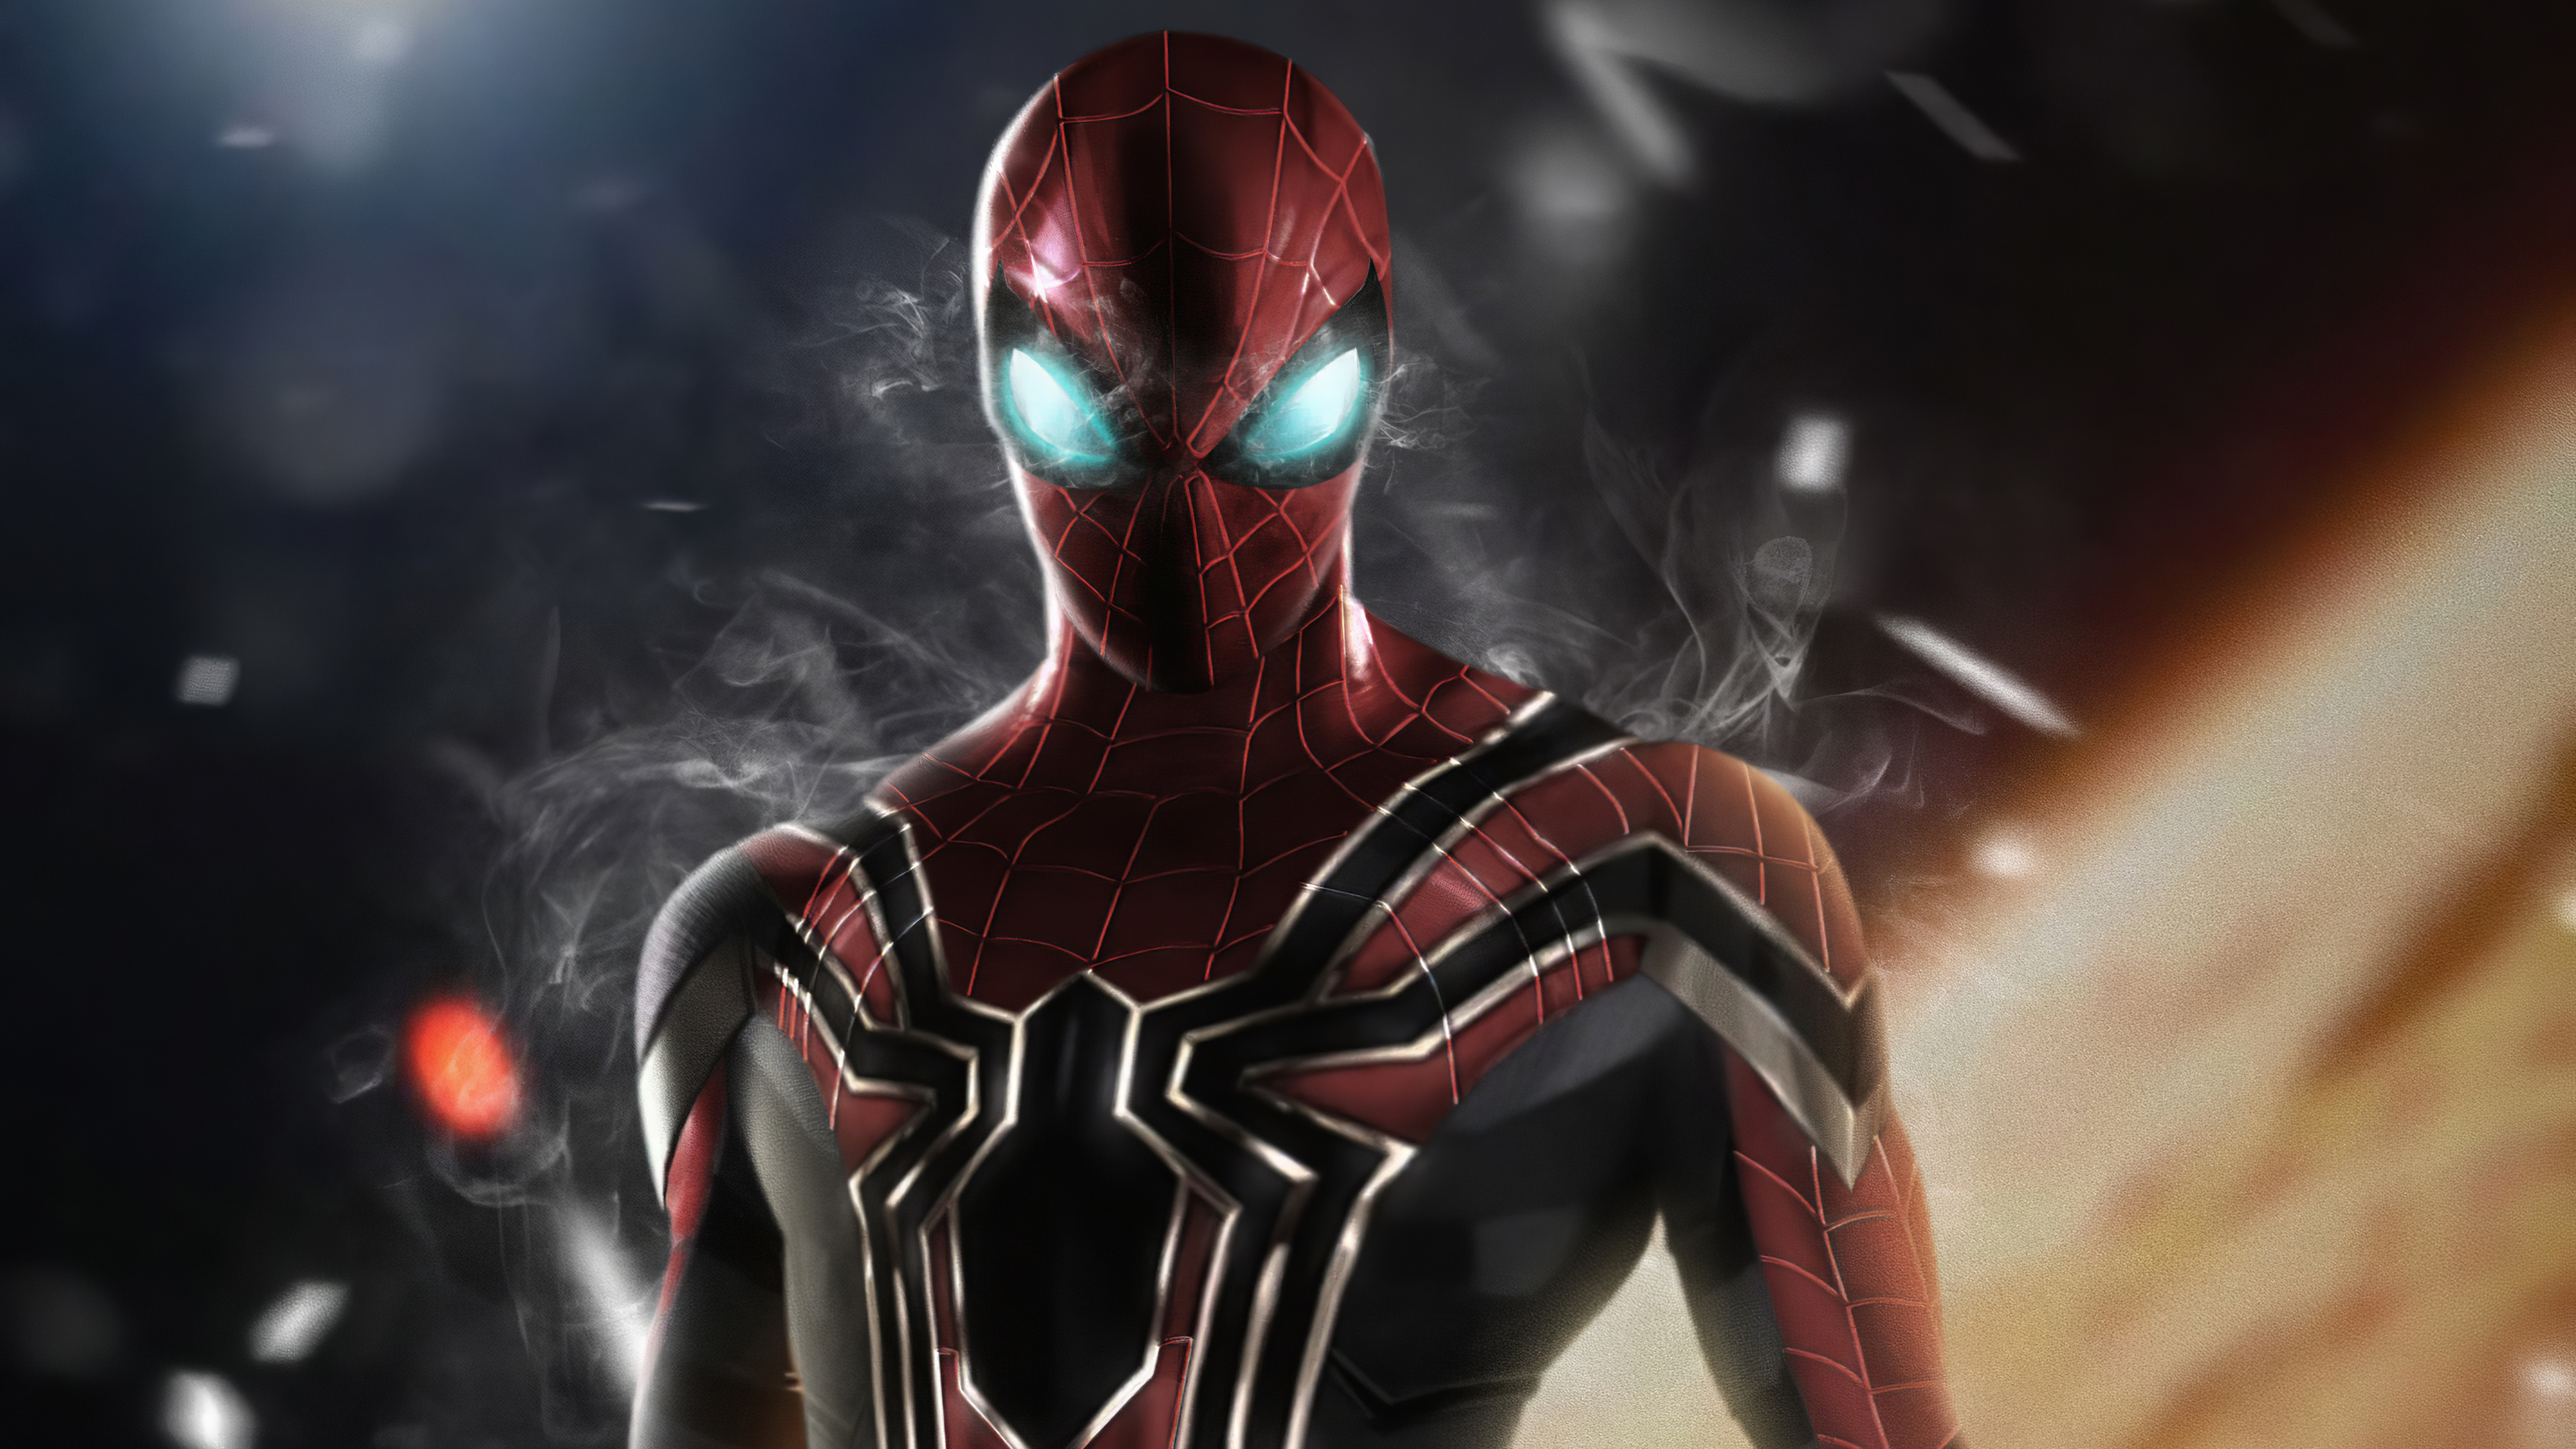 Comics Spider Man 4k Ultra HD Wallpaper By Yadvender Singh Rana